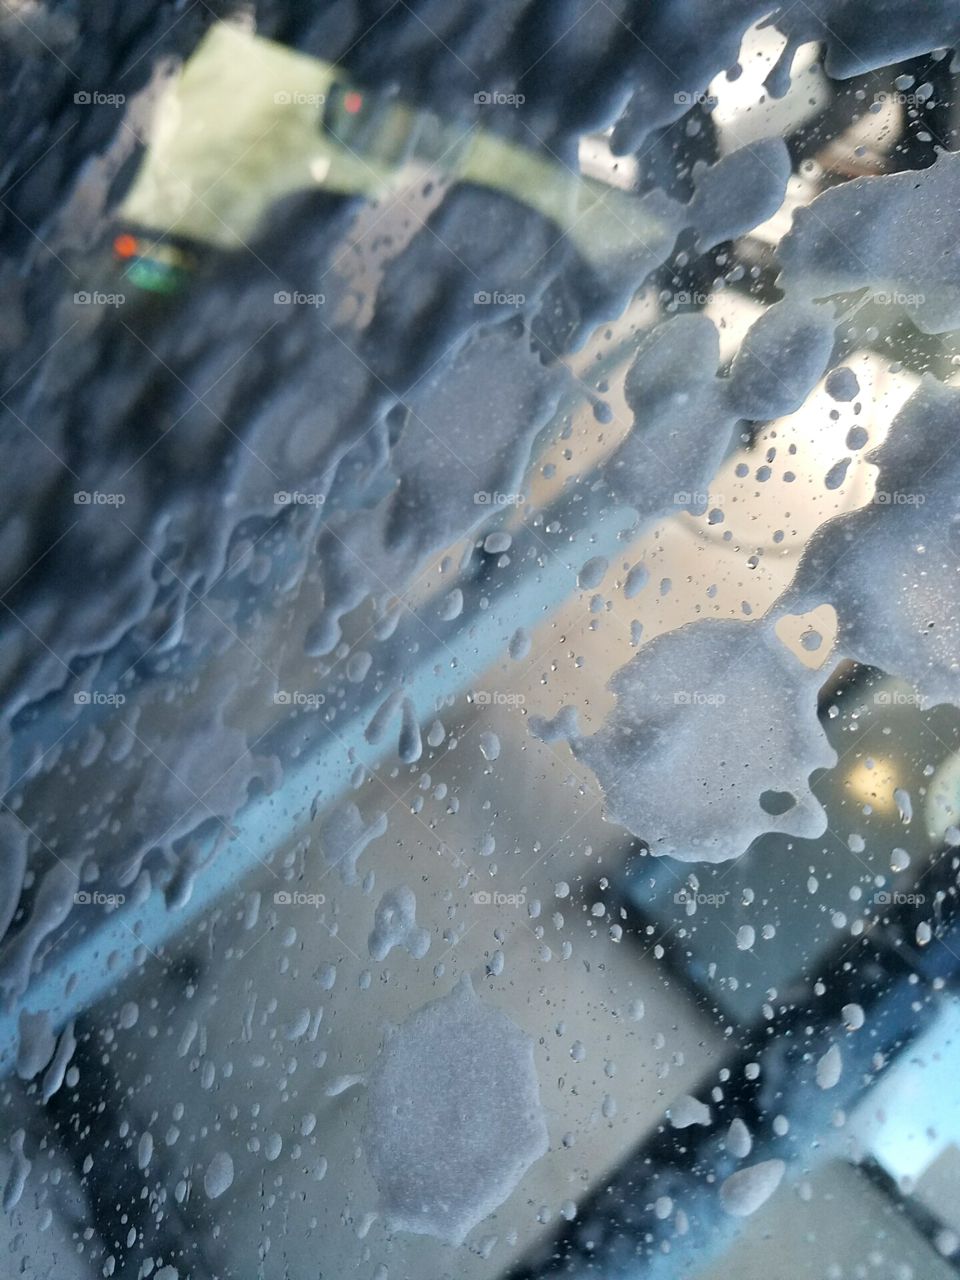 Bubbles in car wash